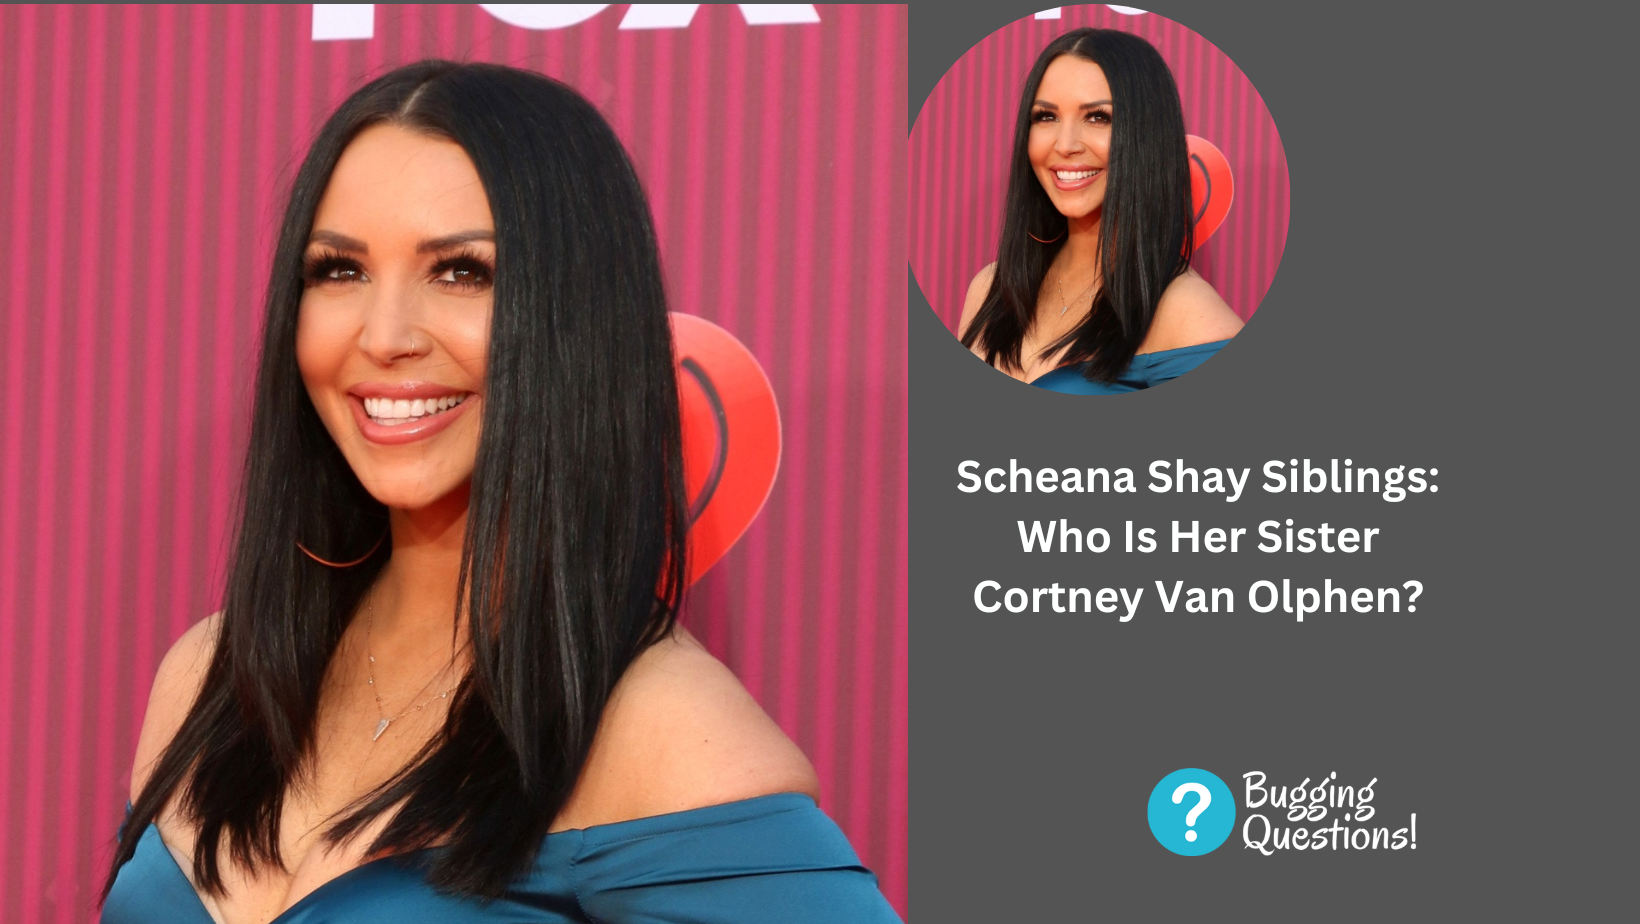 Scheana Shay Siblings: Who Is Her Sister Cortney Van Olphen?